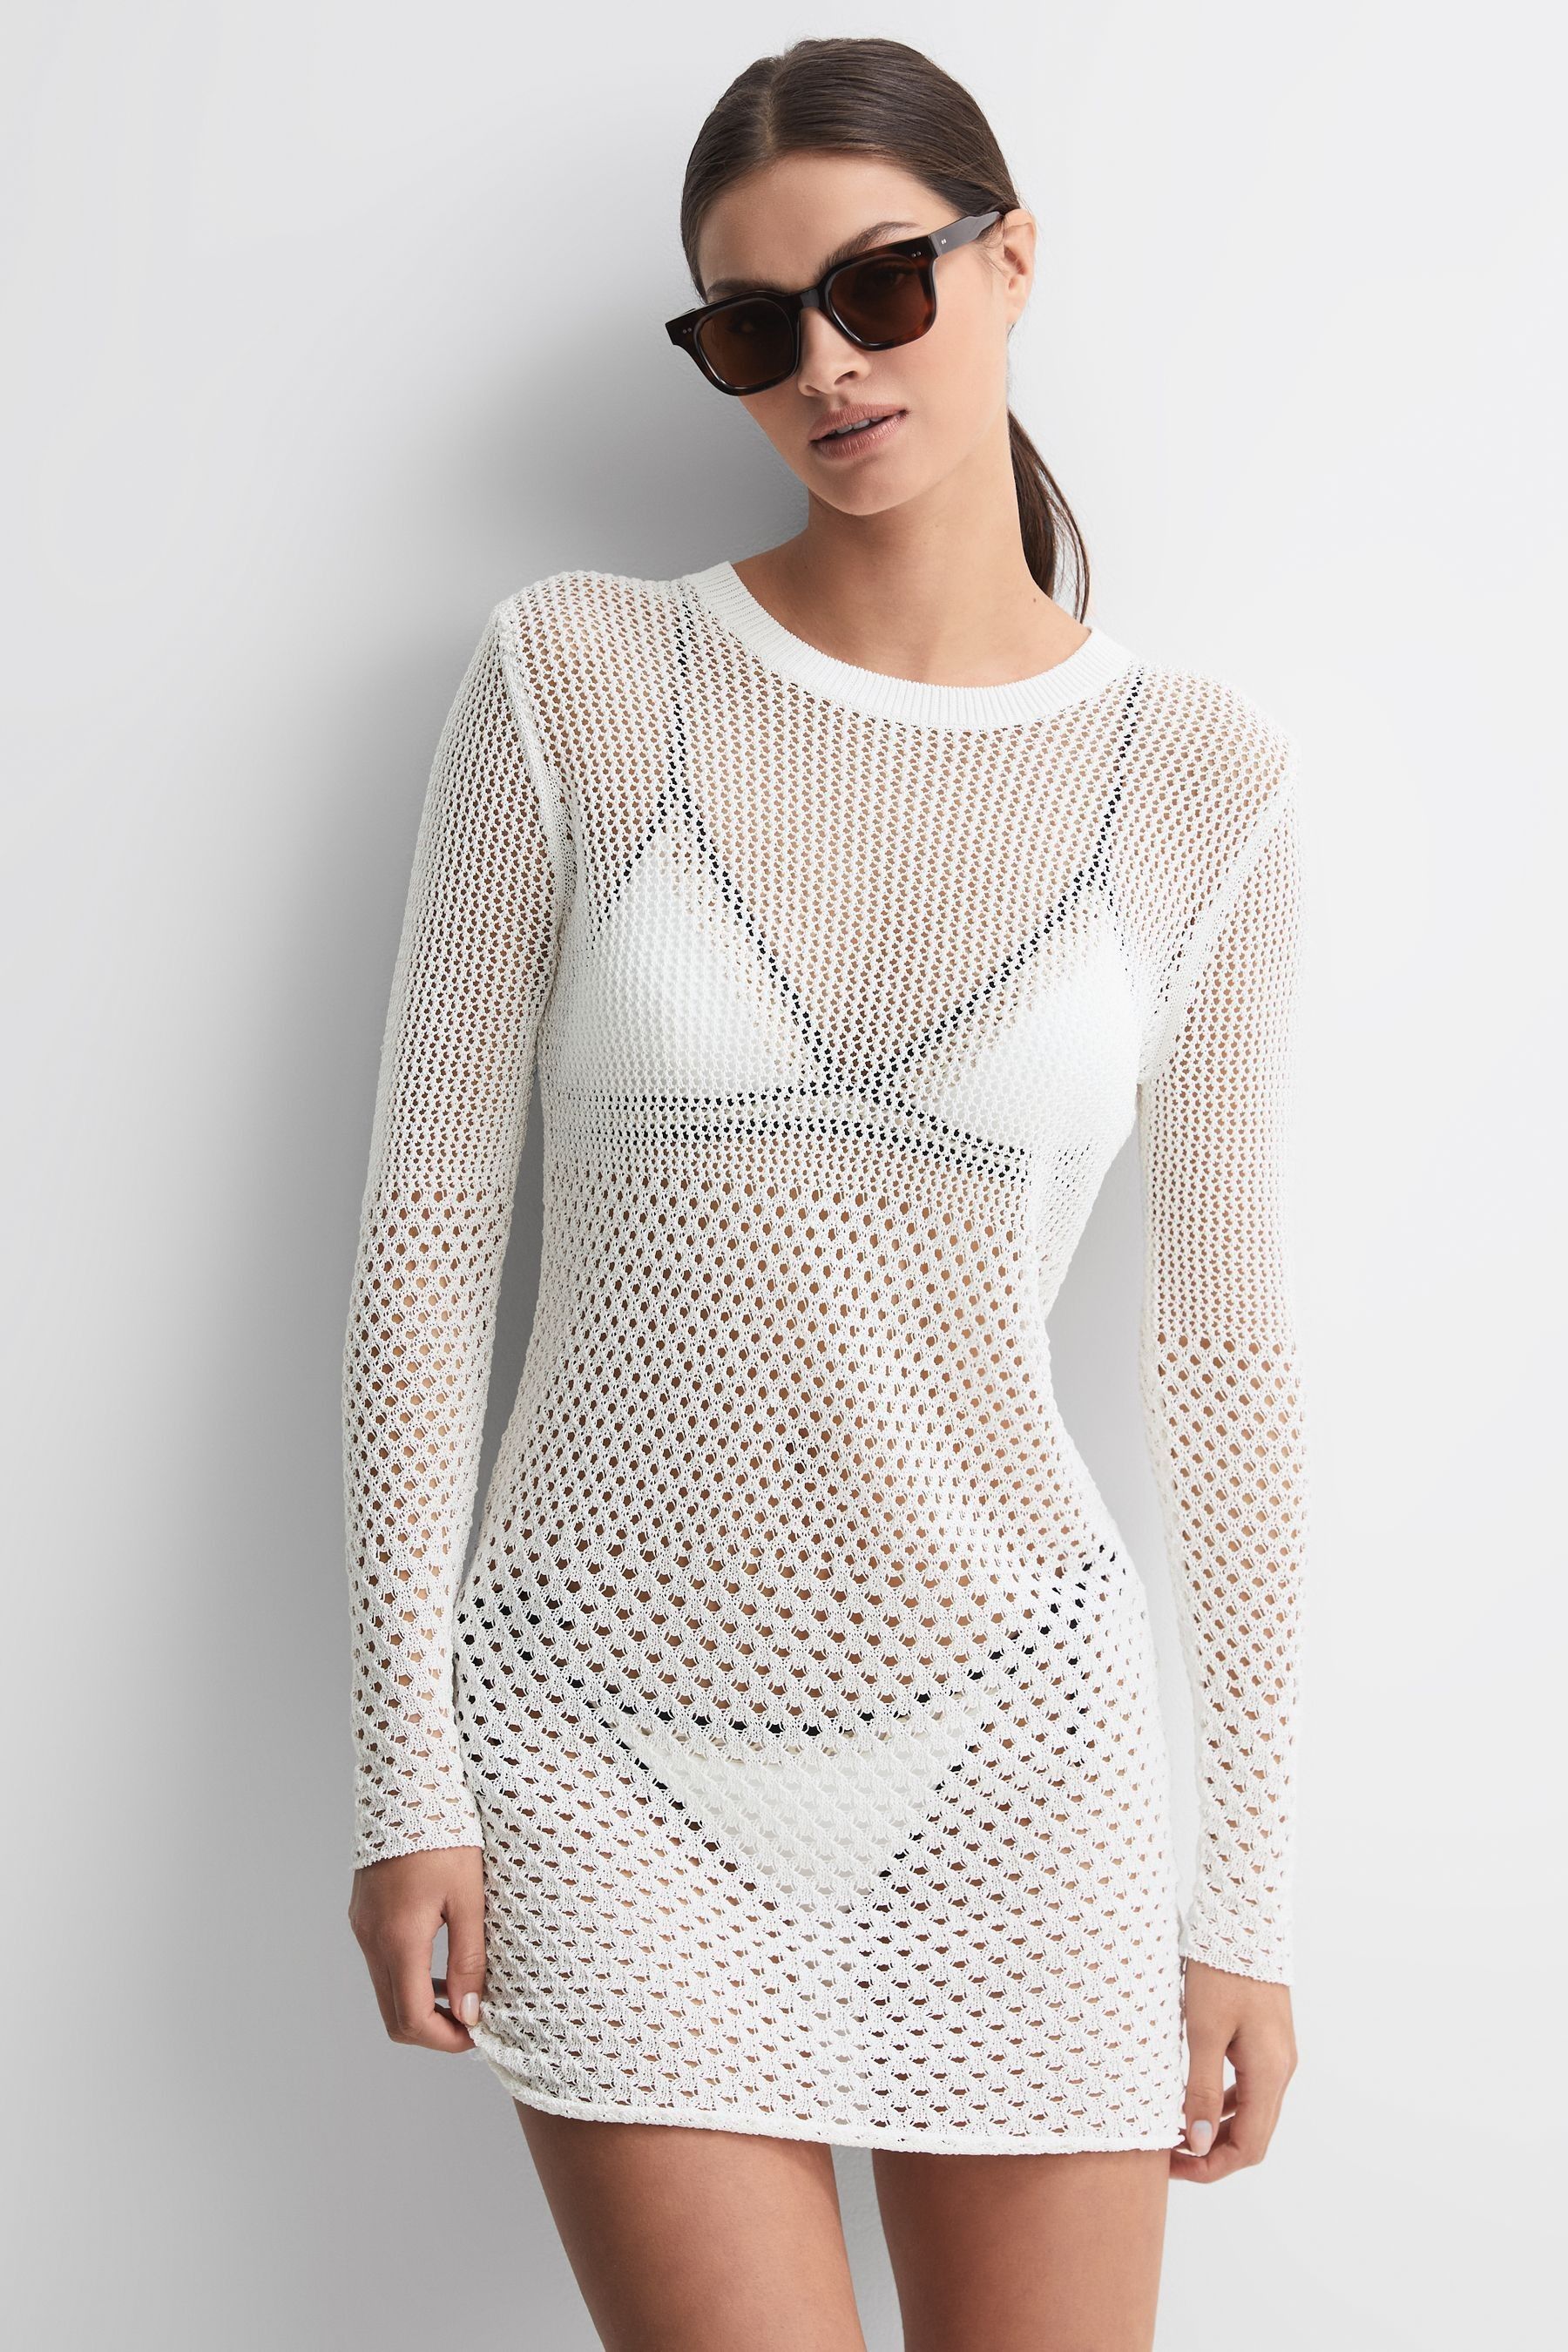 Reiss Esta - Cream Crochet Mini Dress, S